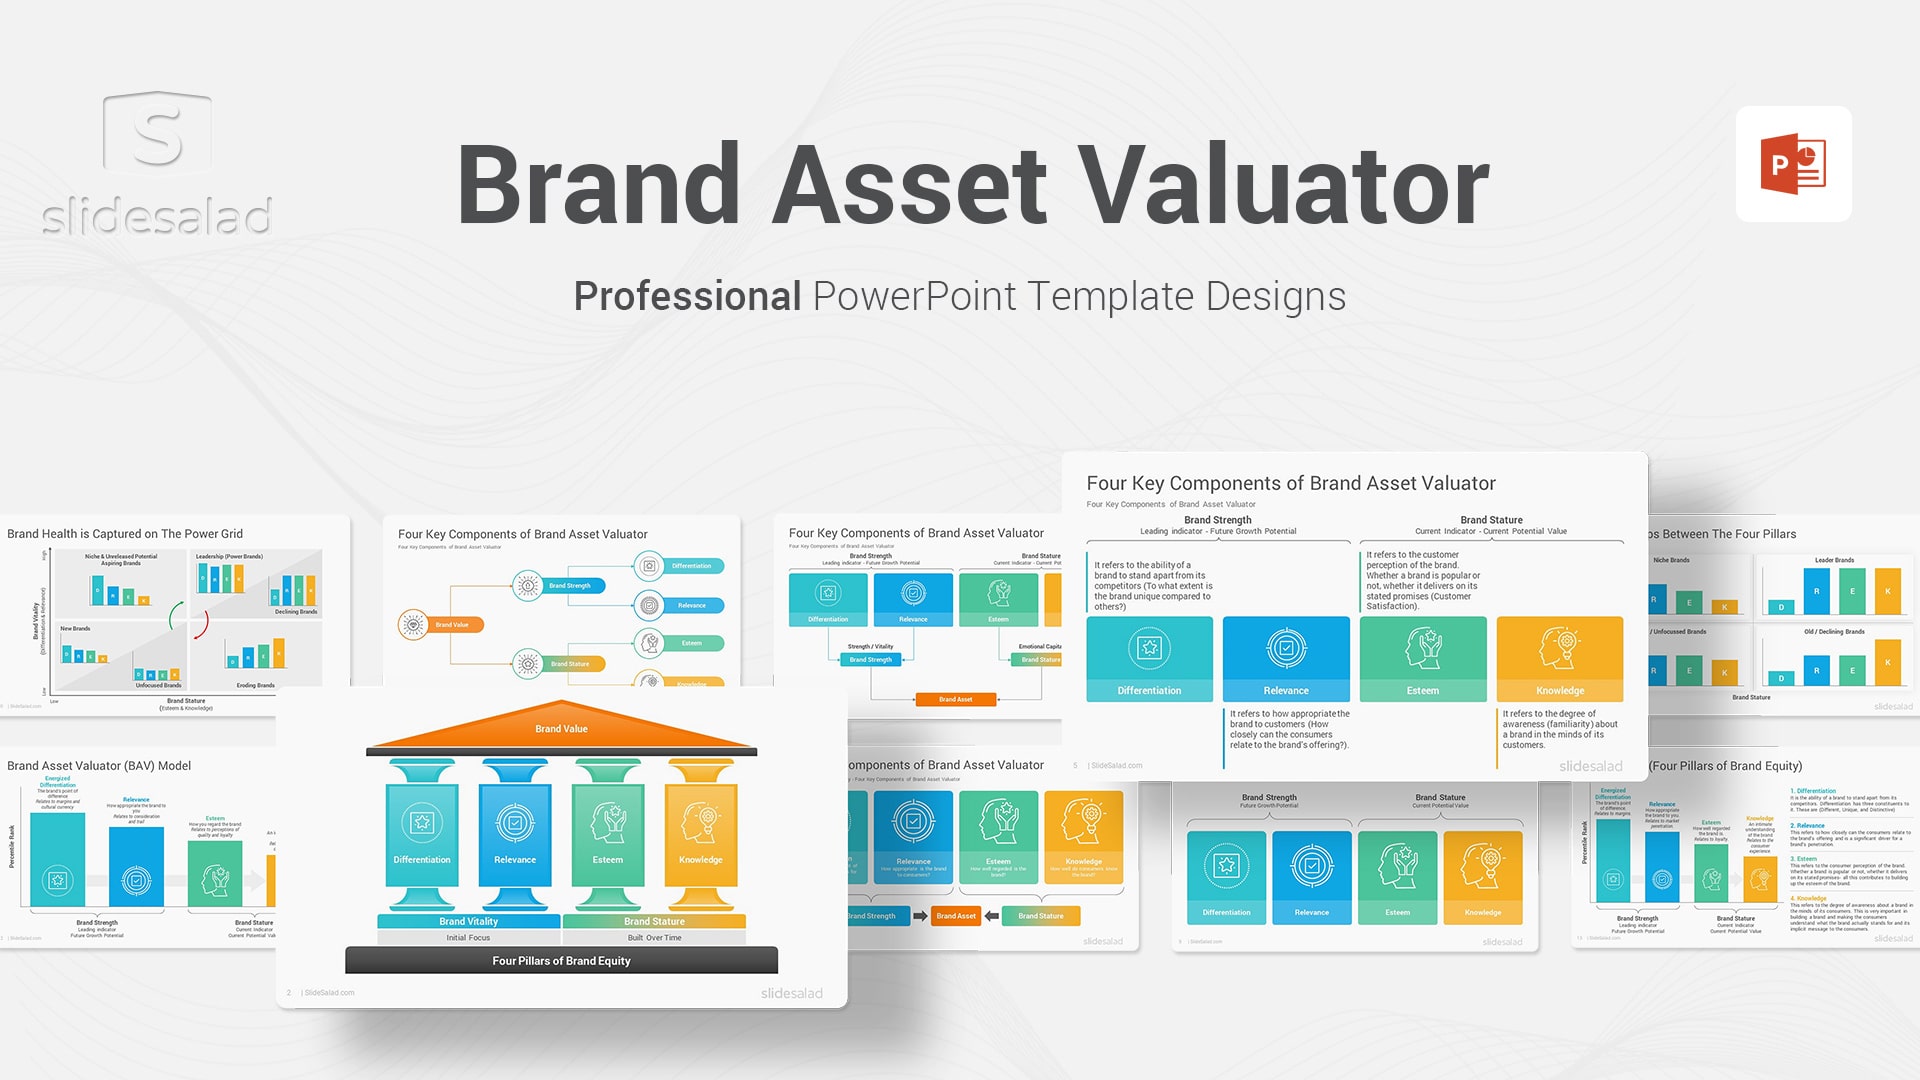 Brand Asset Valuator PowerPoint Template Designs - Creative BAV Model Representation on PowerPoint Slides